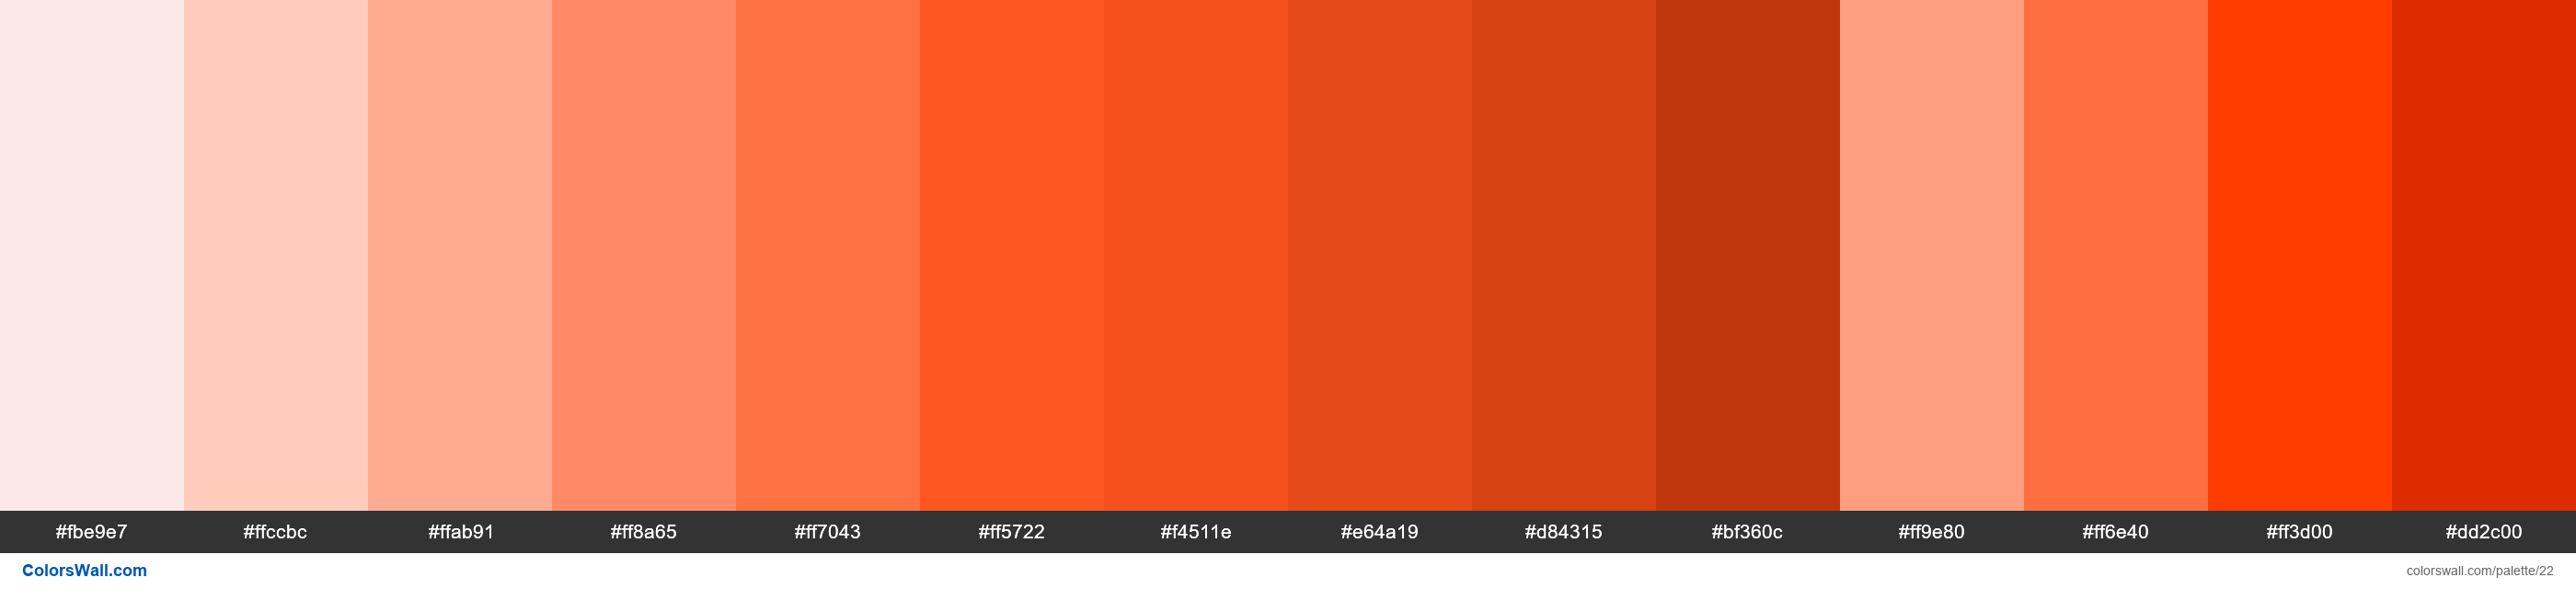 Deep Orange palette Materialize CSS - ColorsWall